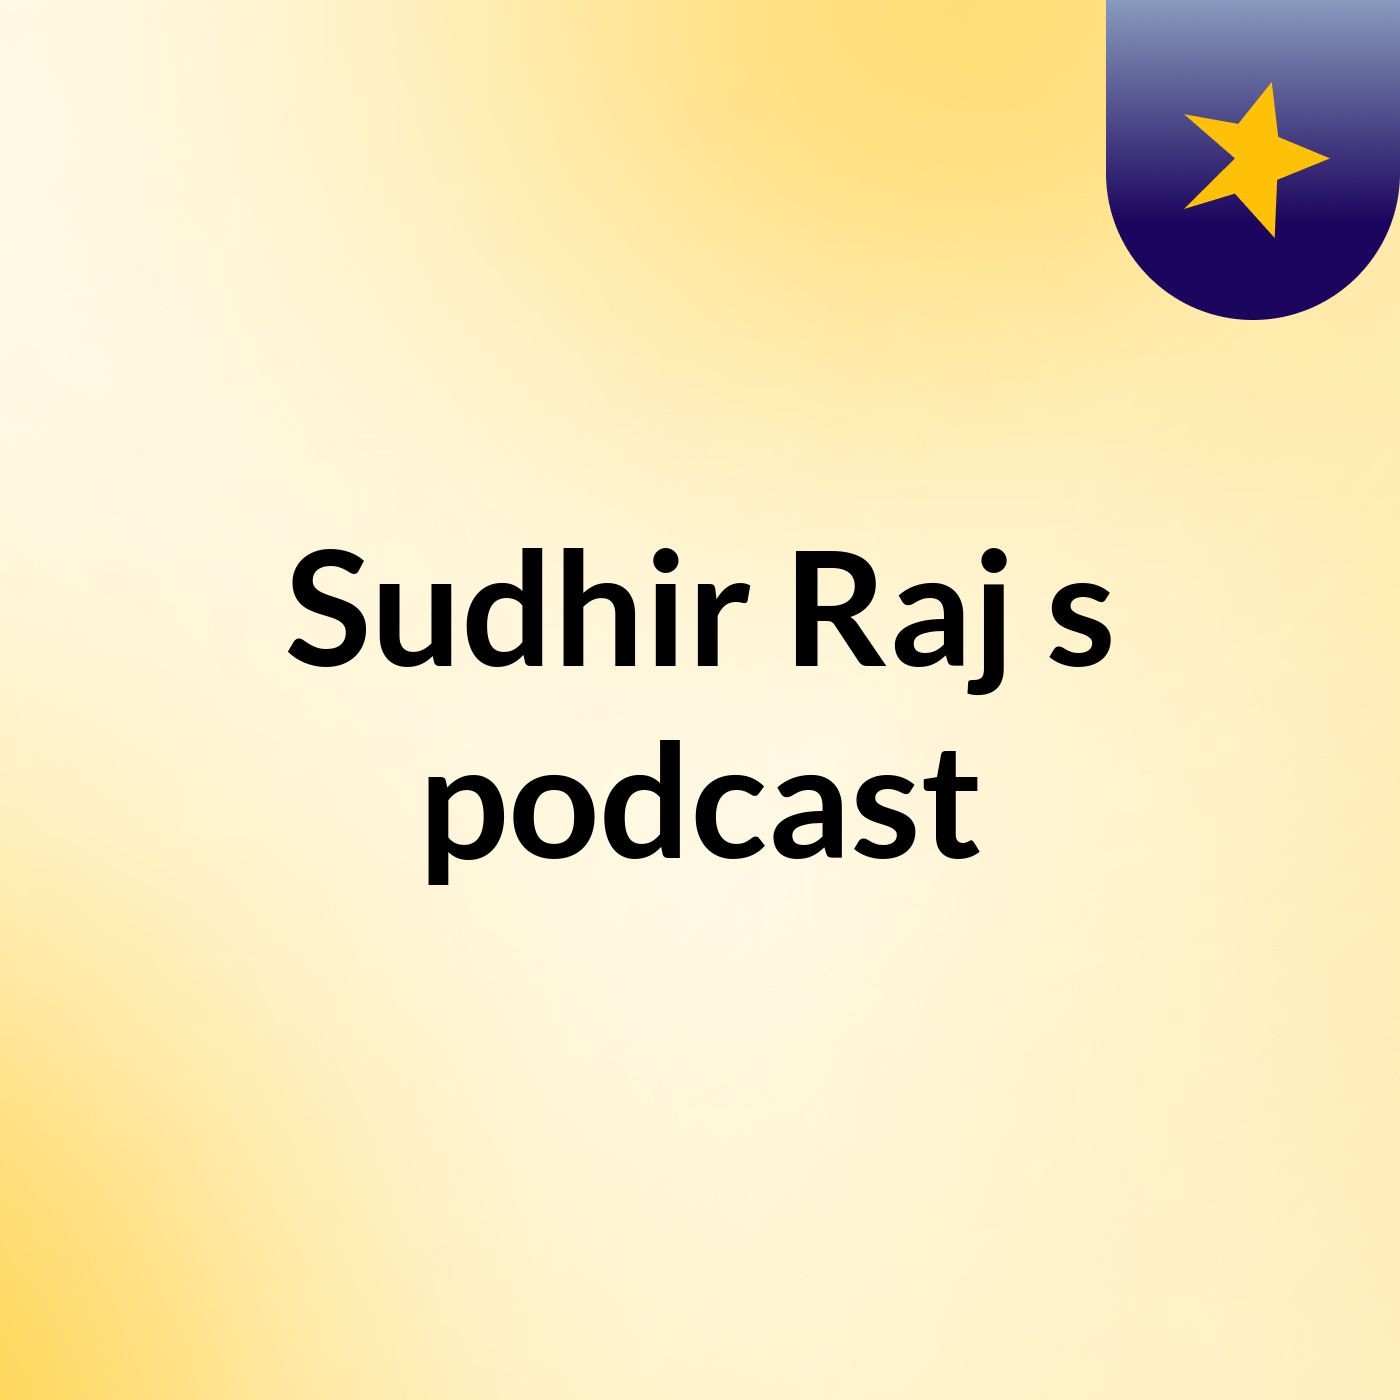 Sudhir Raj's podcast